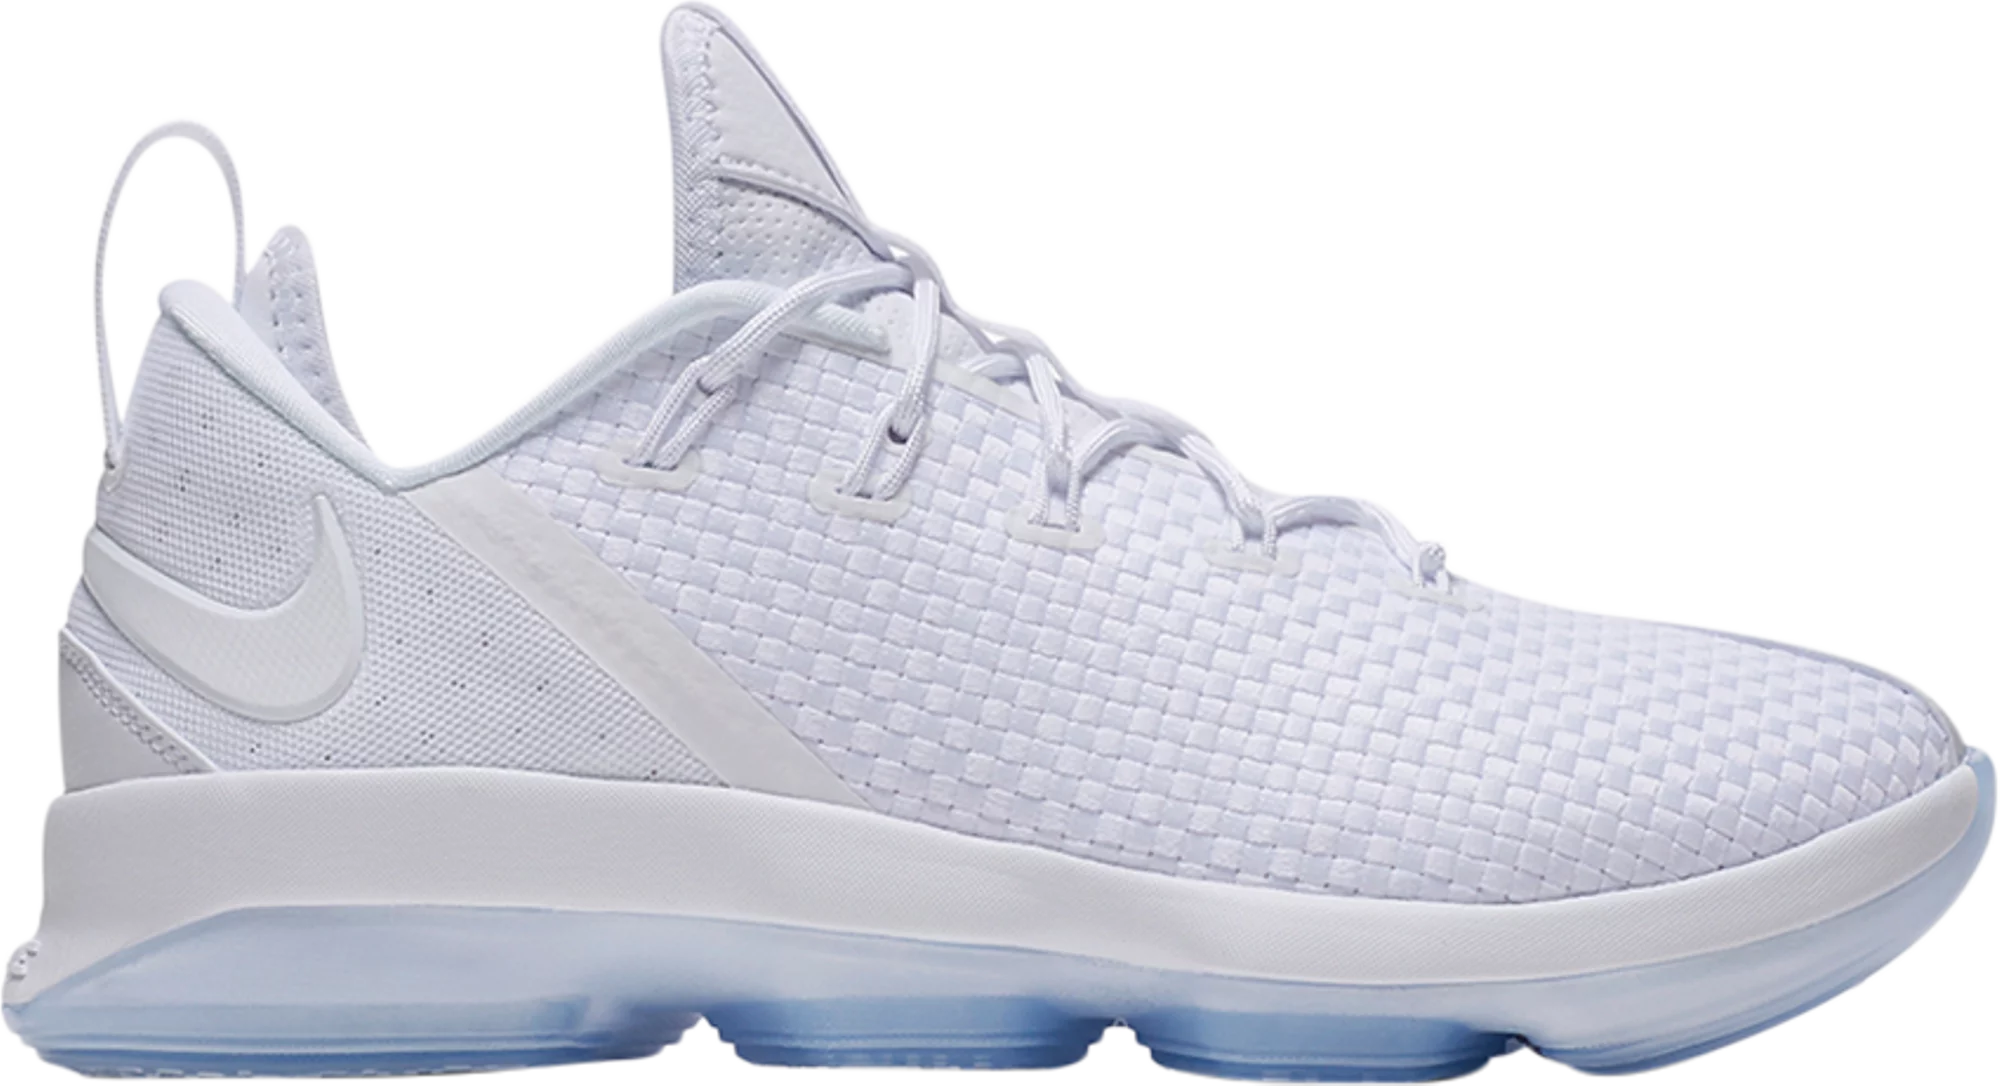 Nike LeBron 14 Low "White Ice" 2017